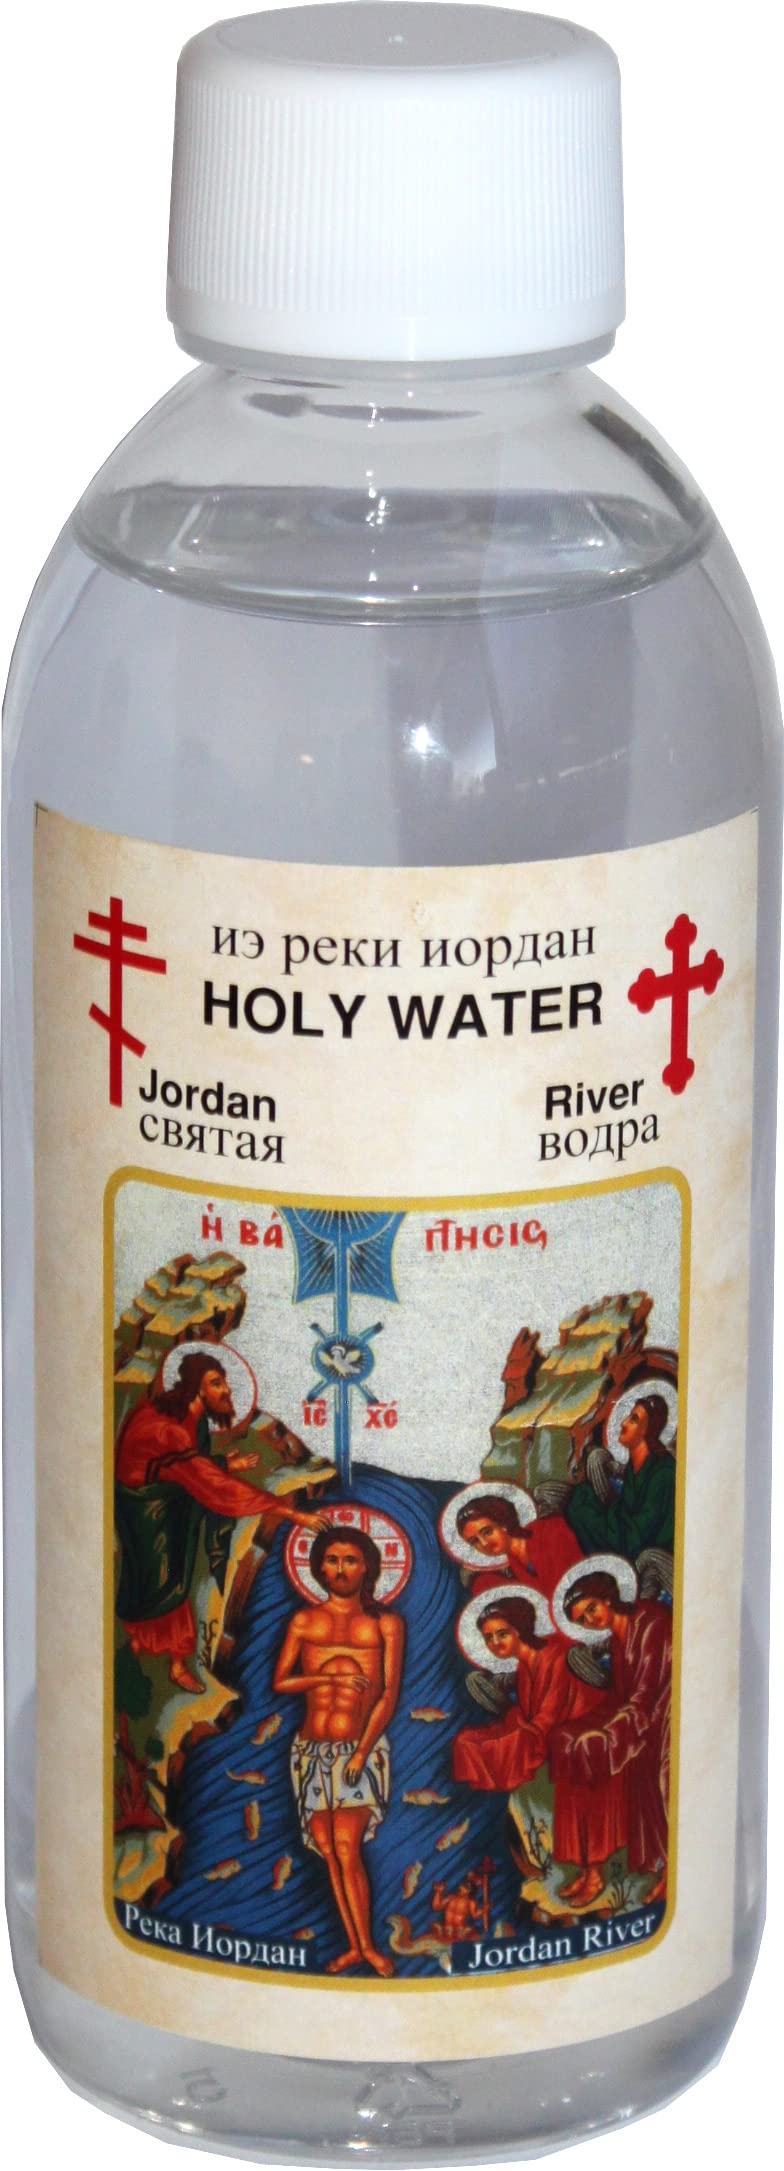 Holy Land Market Jordan River Holy Water from Jerusalem